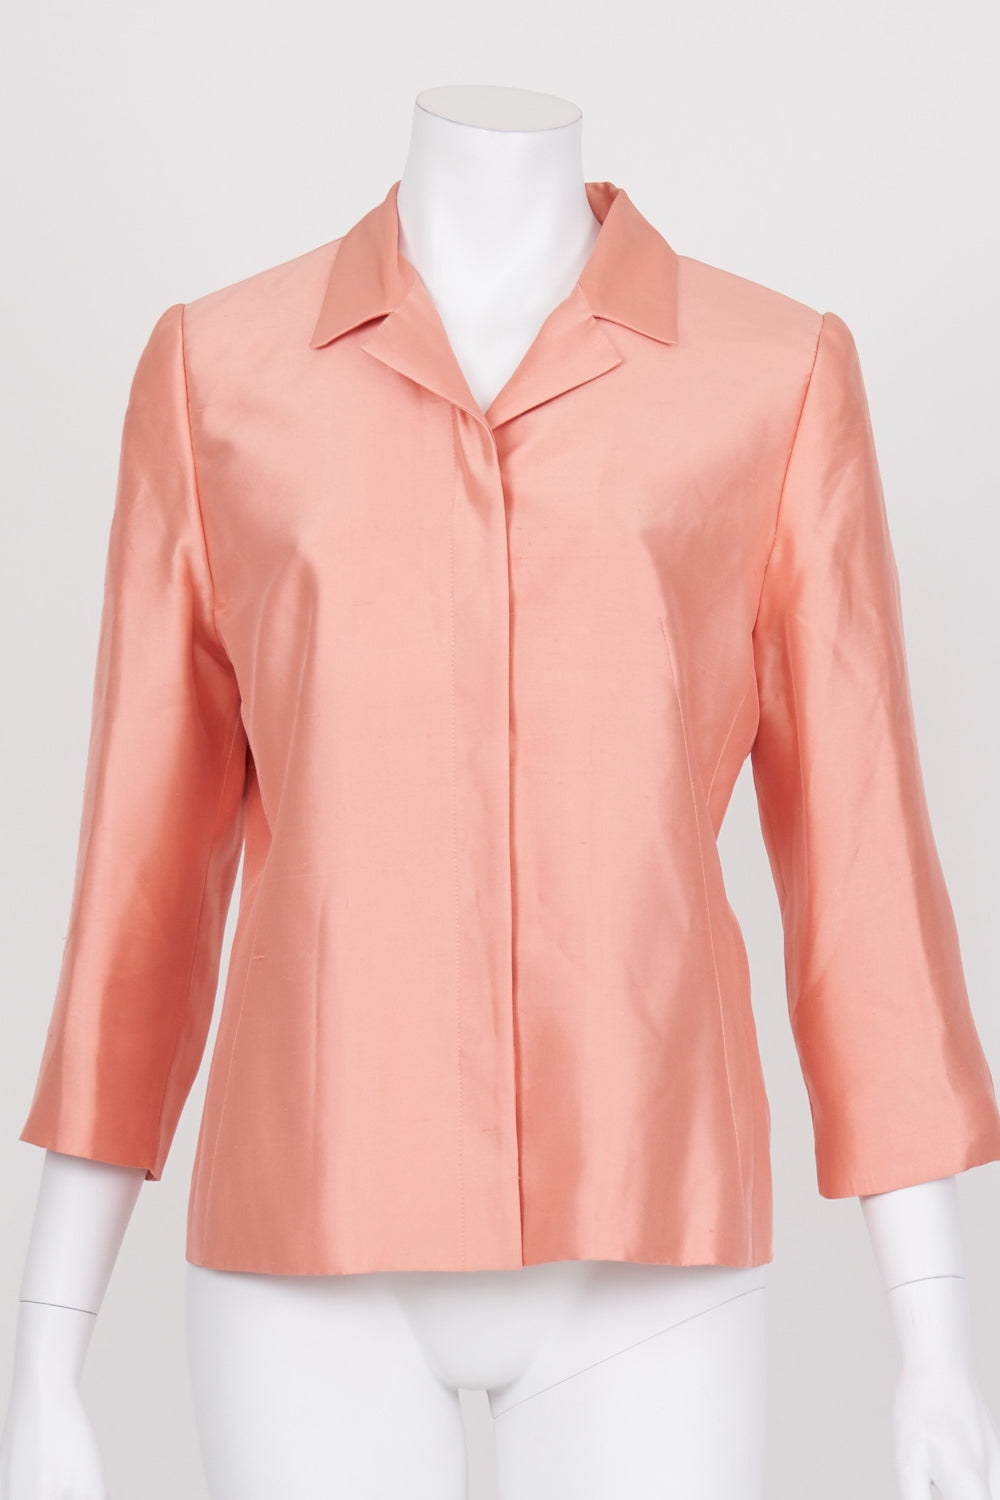 Anthea Crawford Pink Button Front Silk Jacket 12